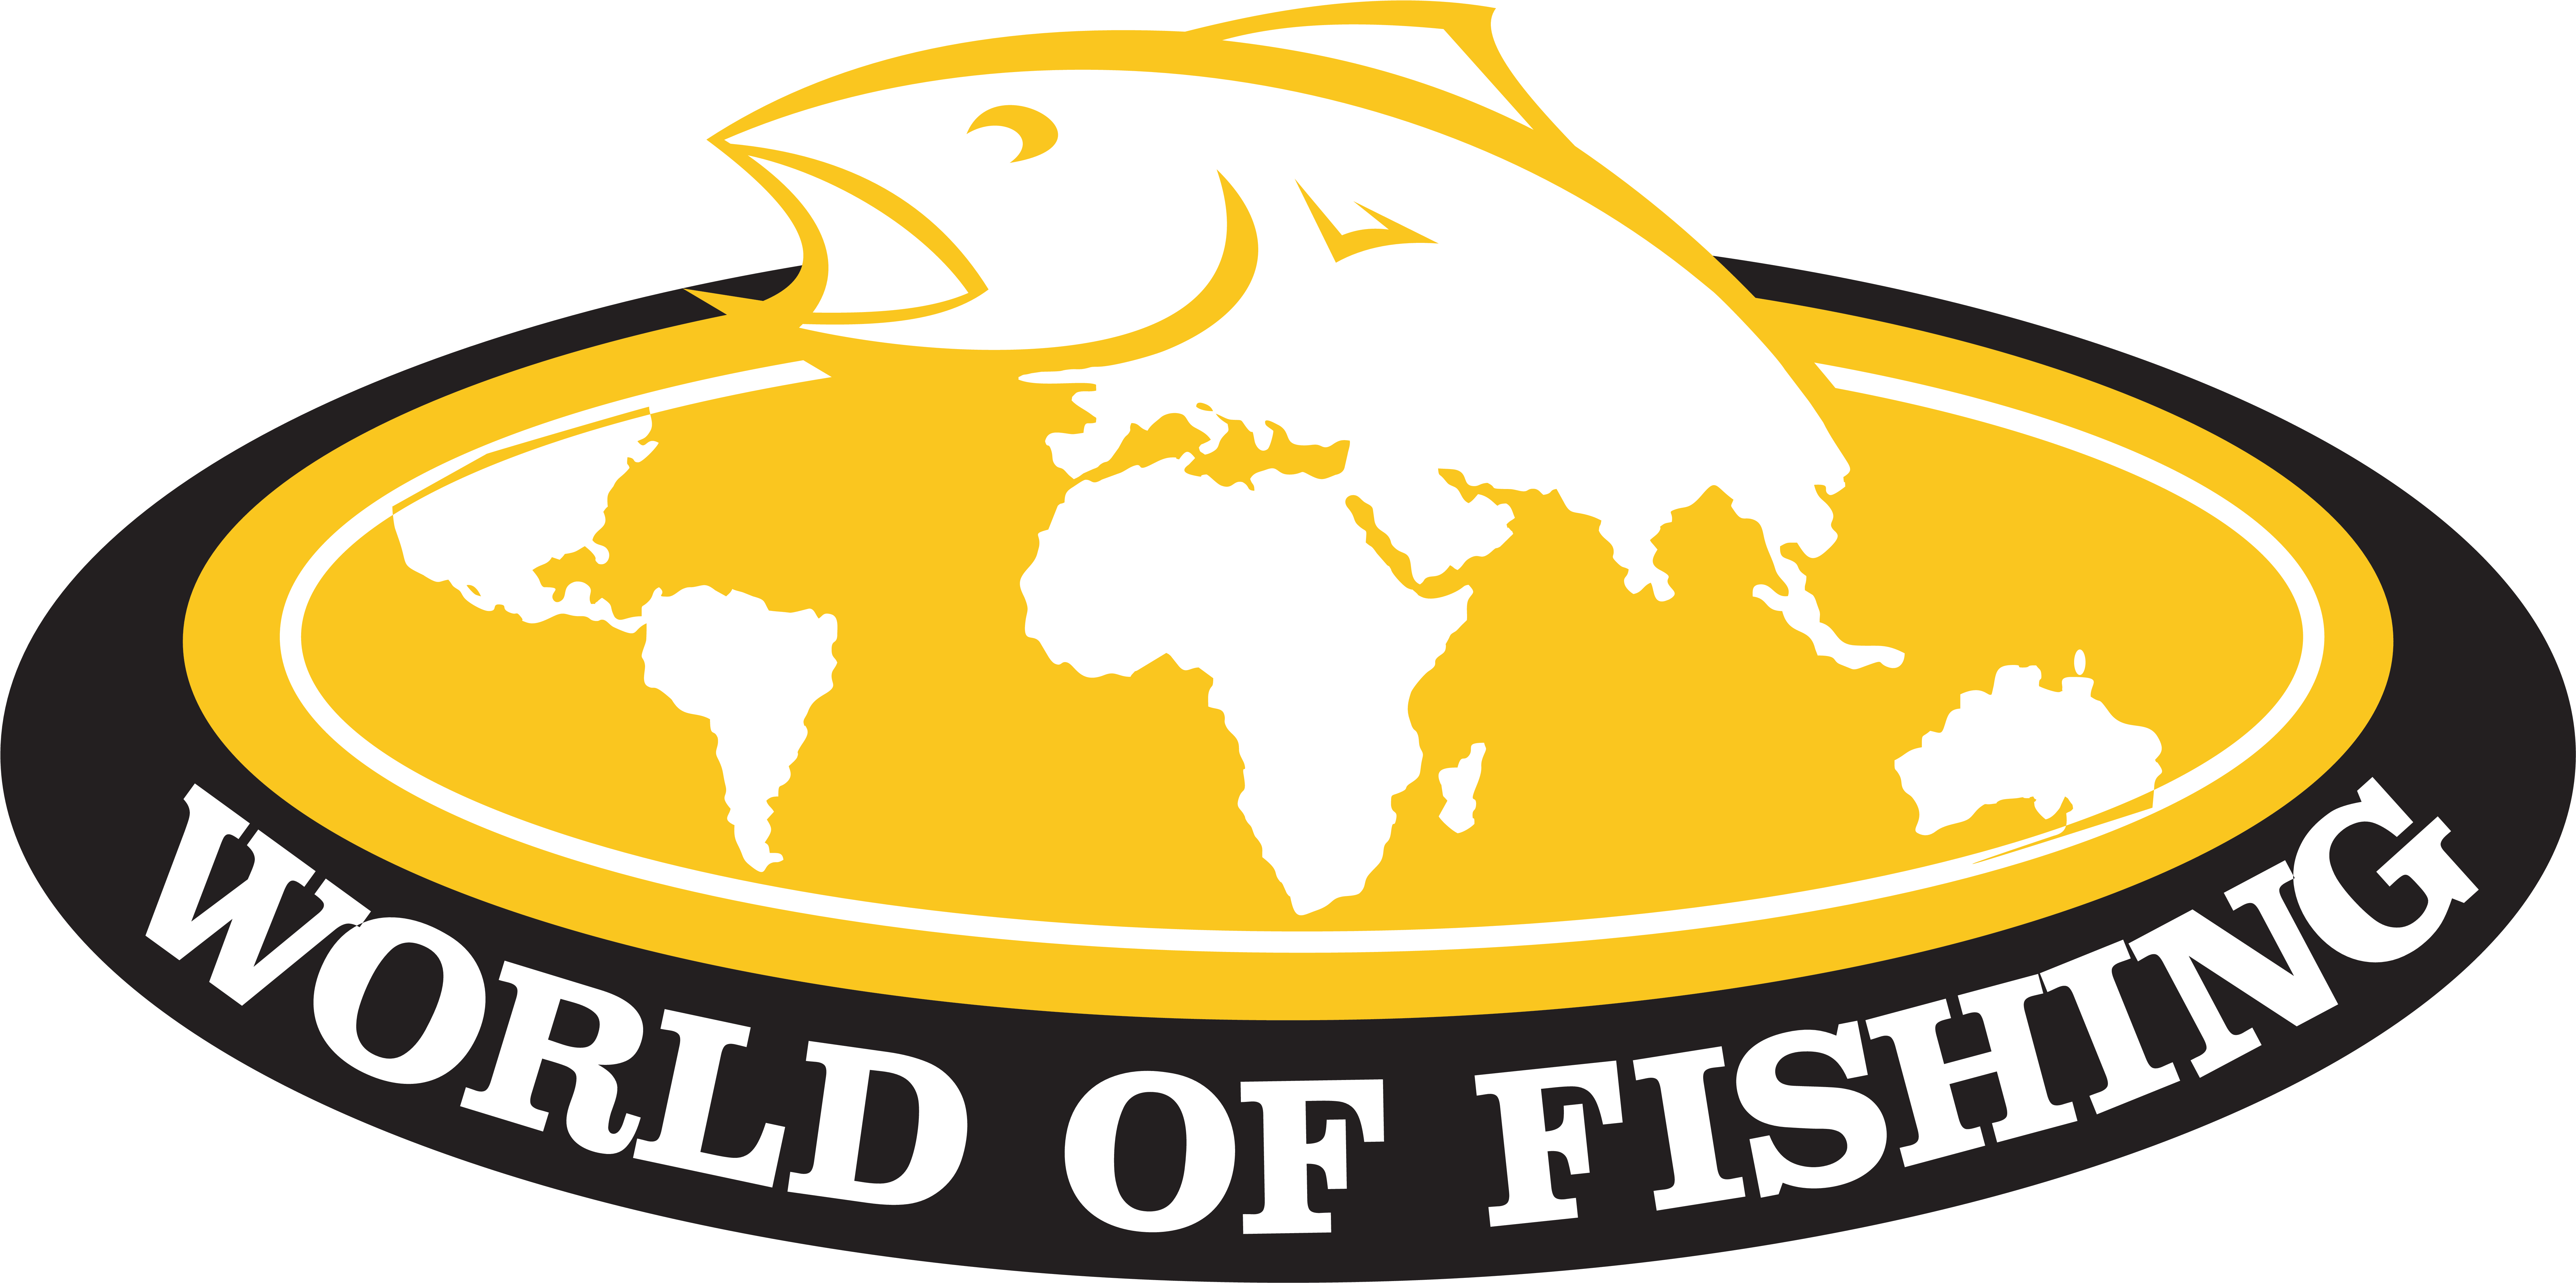 World Of Fishing - Worlds Of Fun (8685x4354)